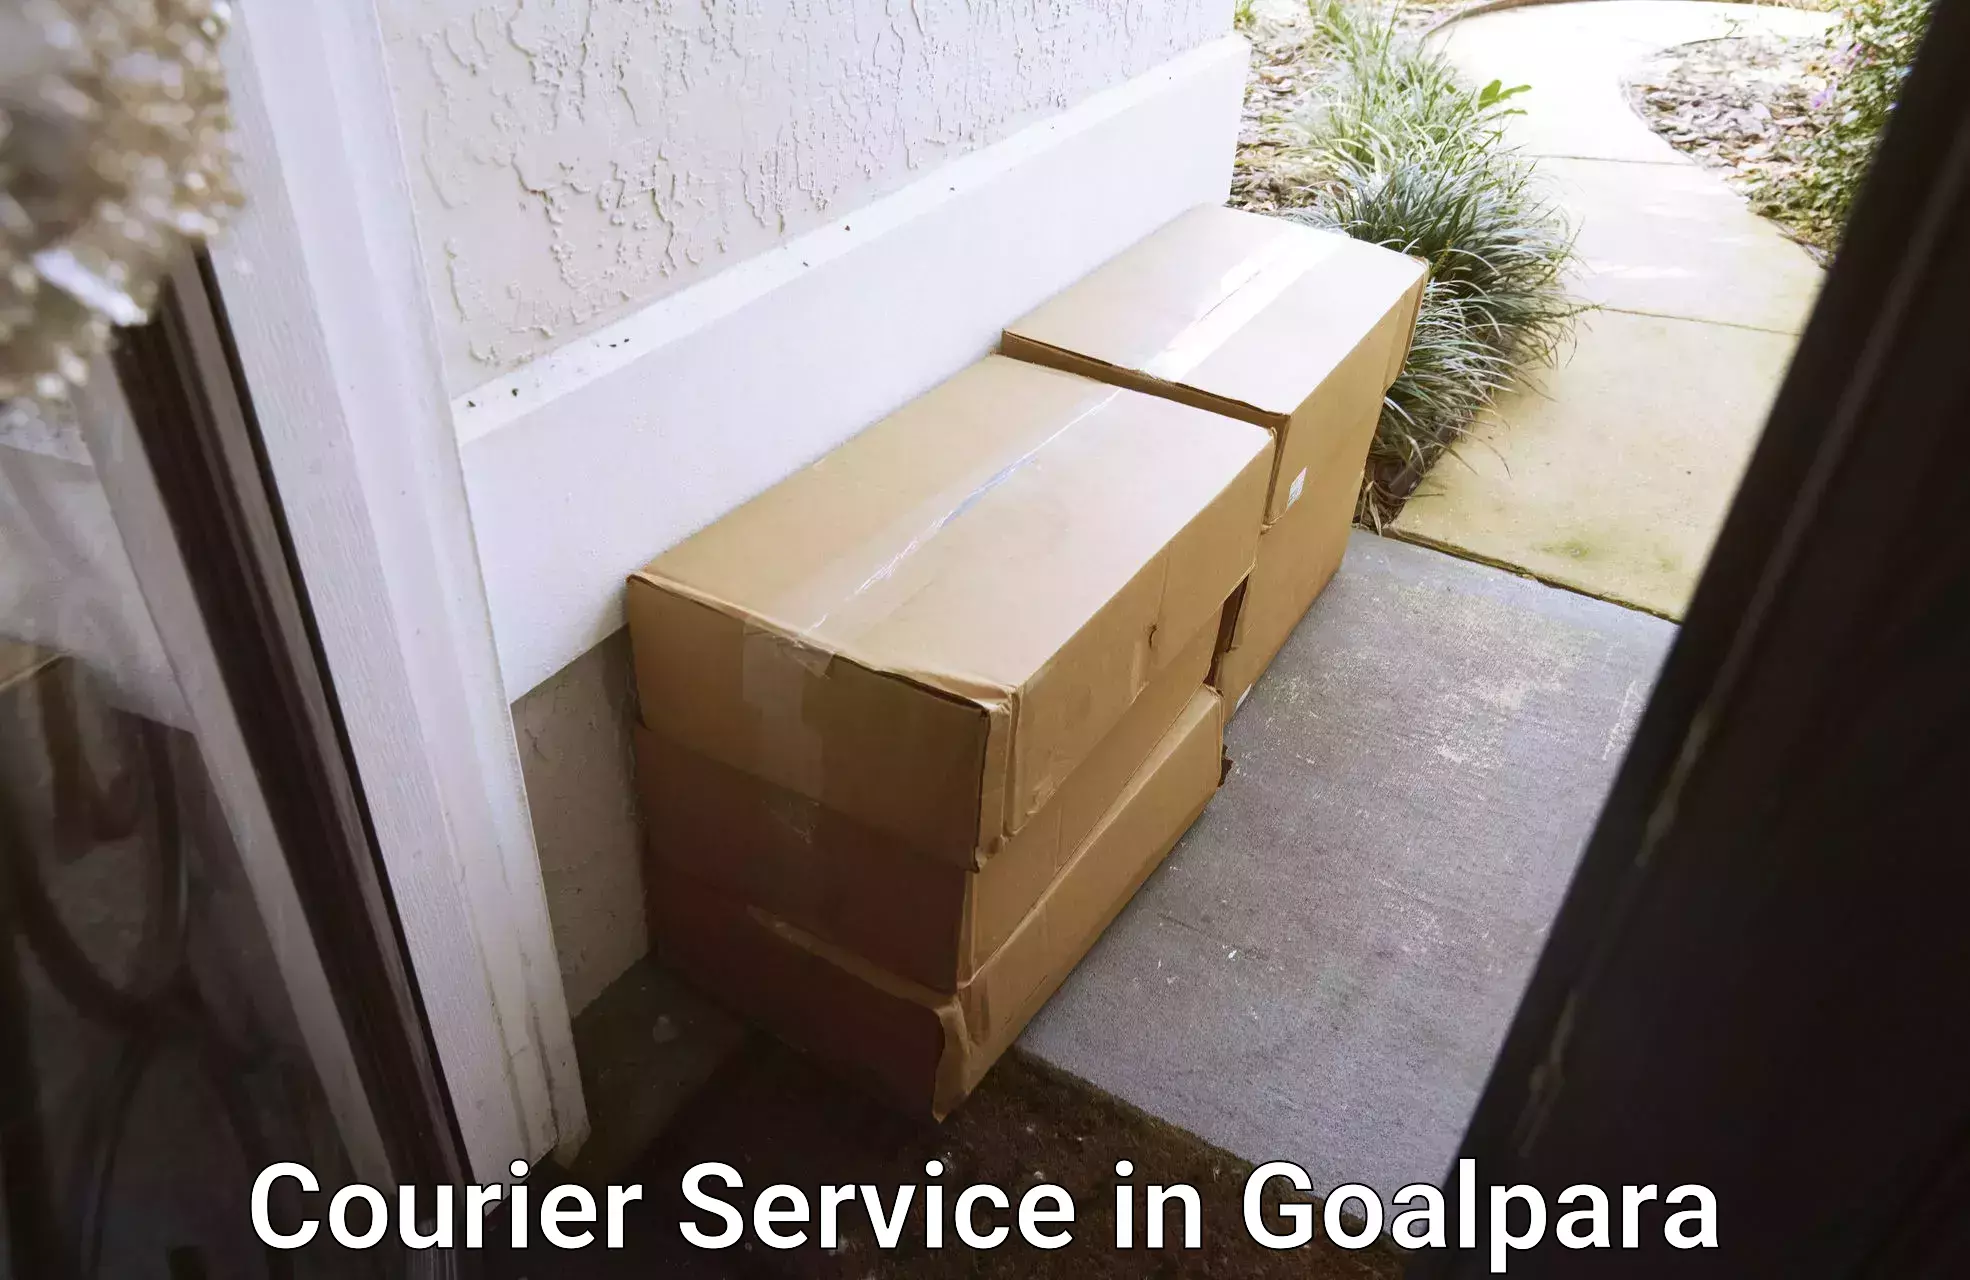 E-commerce shipping in Goalpara